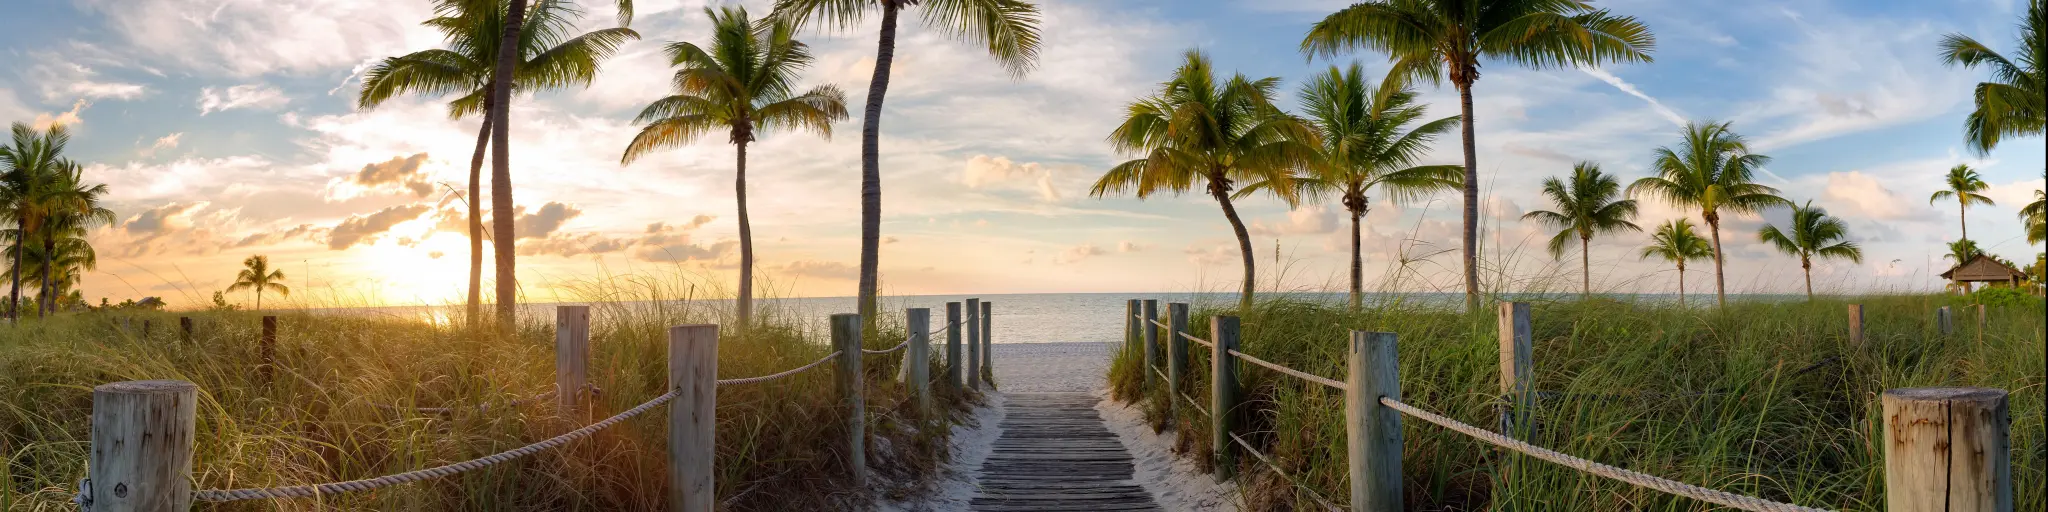 Panorama view of footbridge to the Smathers beach at sunrise - Key West, Florida, USA.